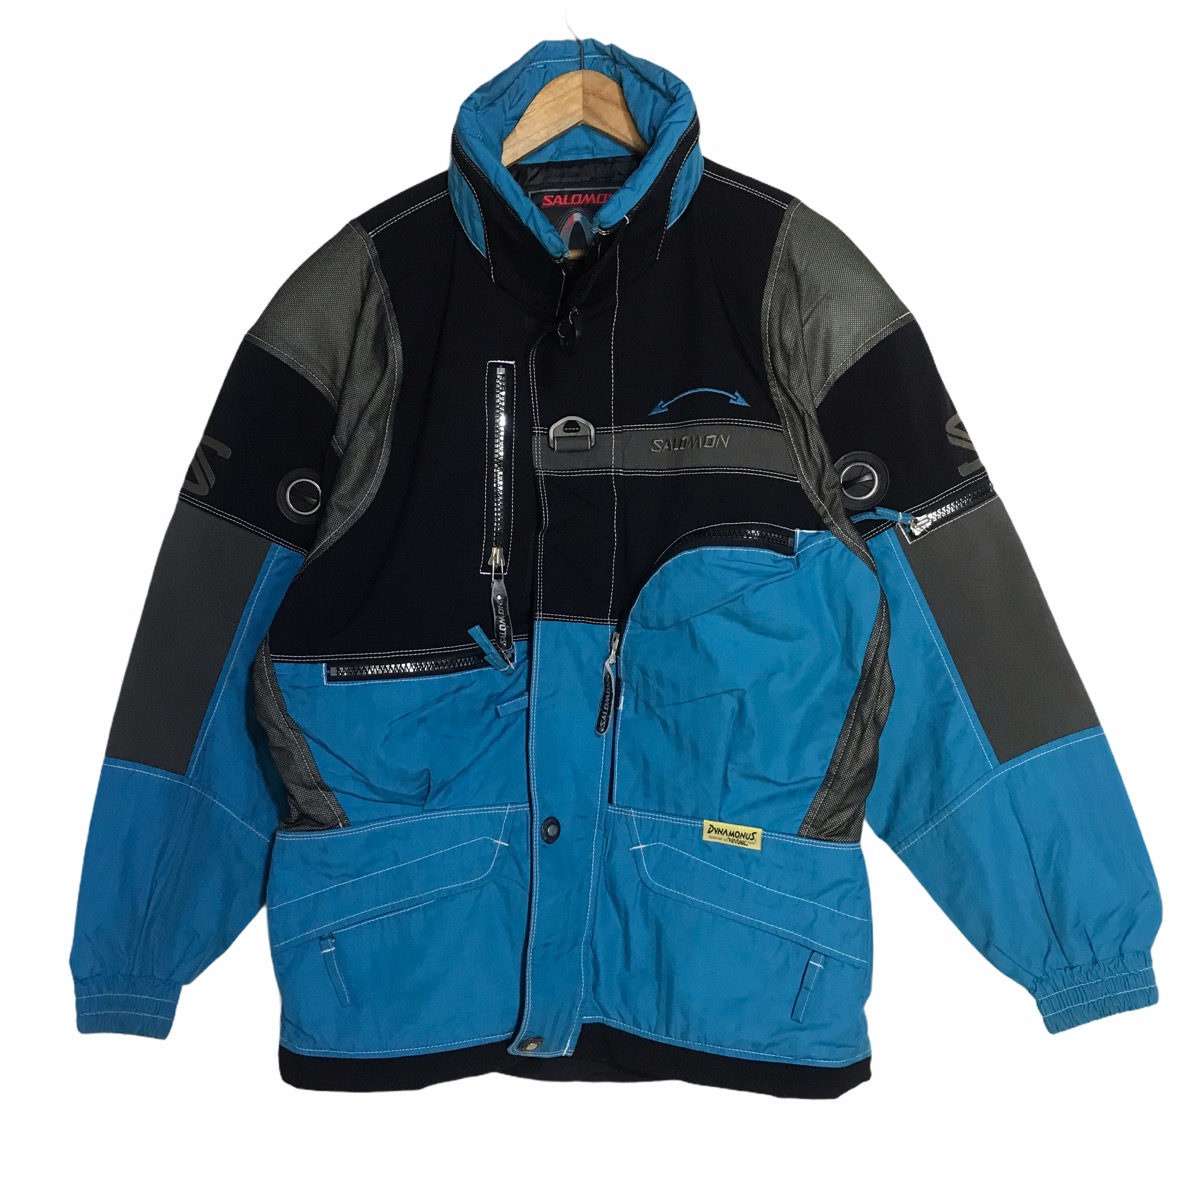 Salomon dyna monus kevlar fabric ski jacket - 1